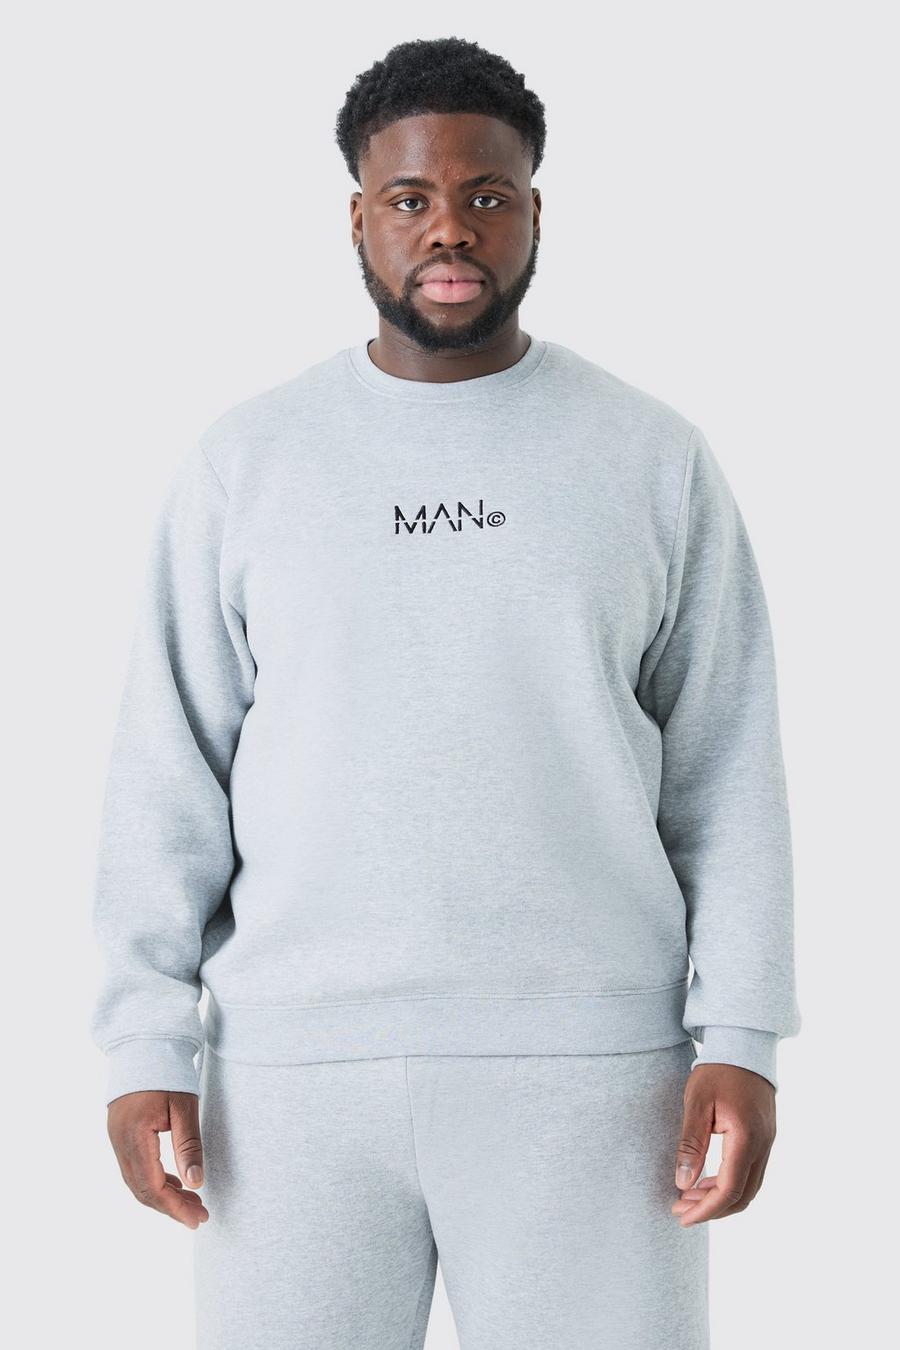 Plus Man Dash Crew Neck Sweatshirt In Grey Marl